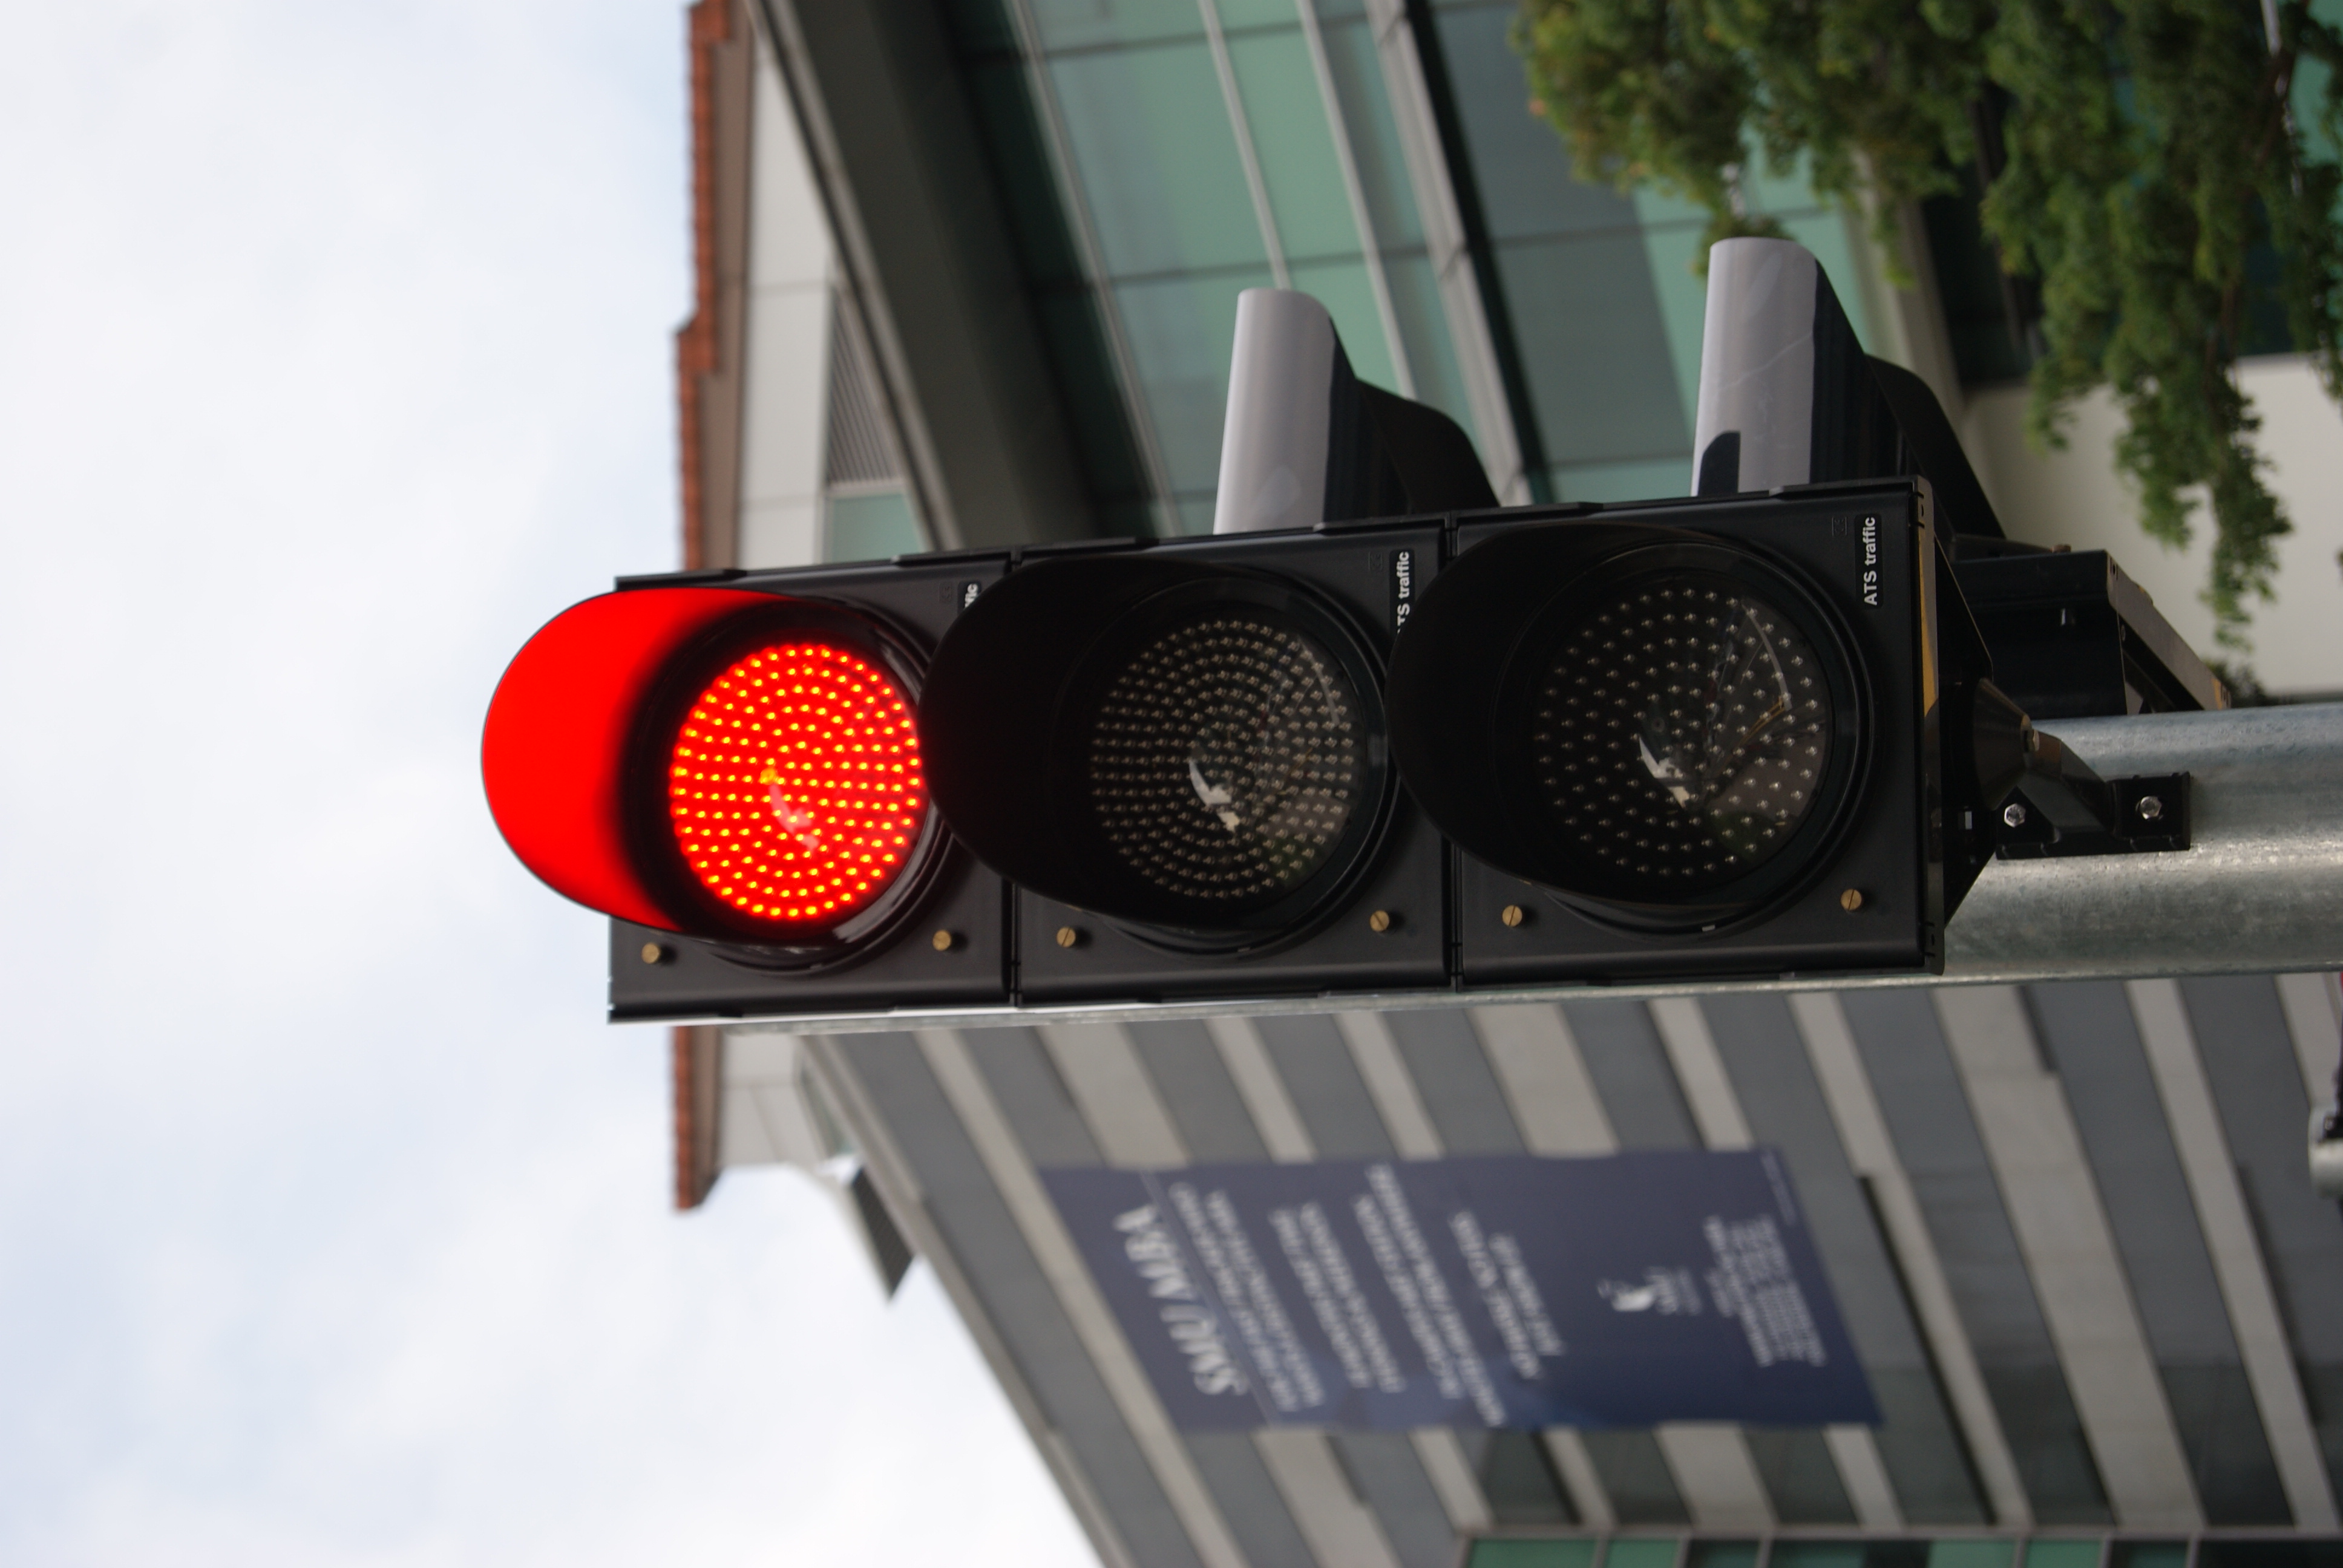 File:Red traffic signal, Stamford Road, Singapore - 20111210-02.jpg ...